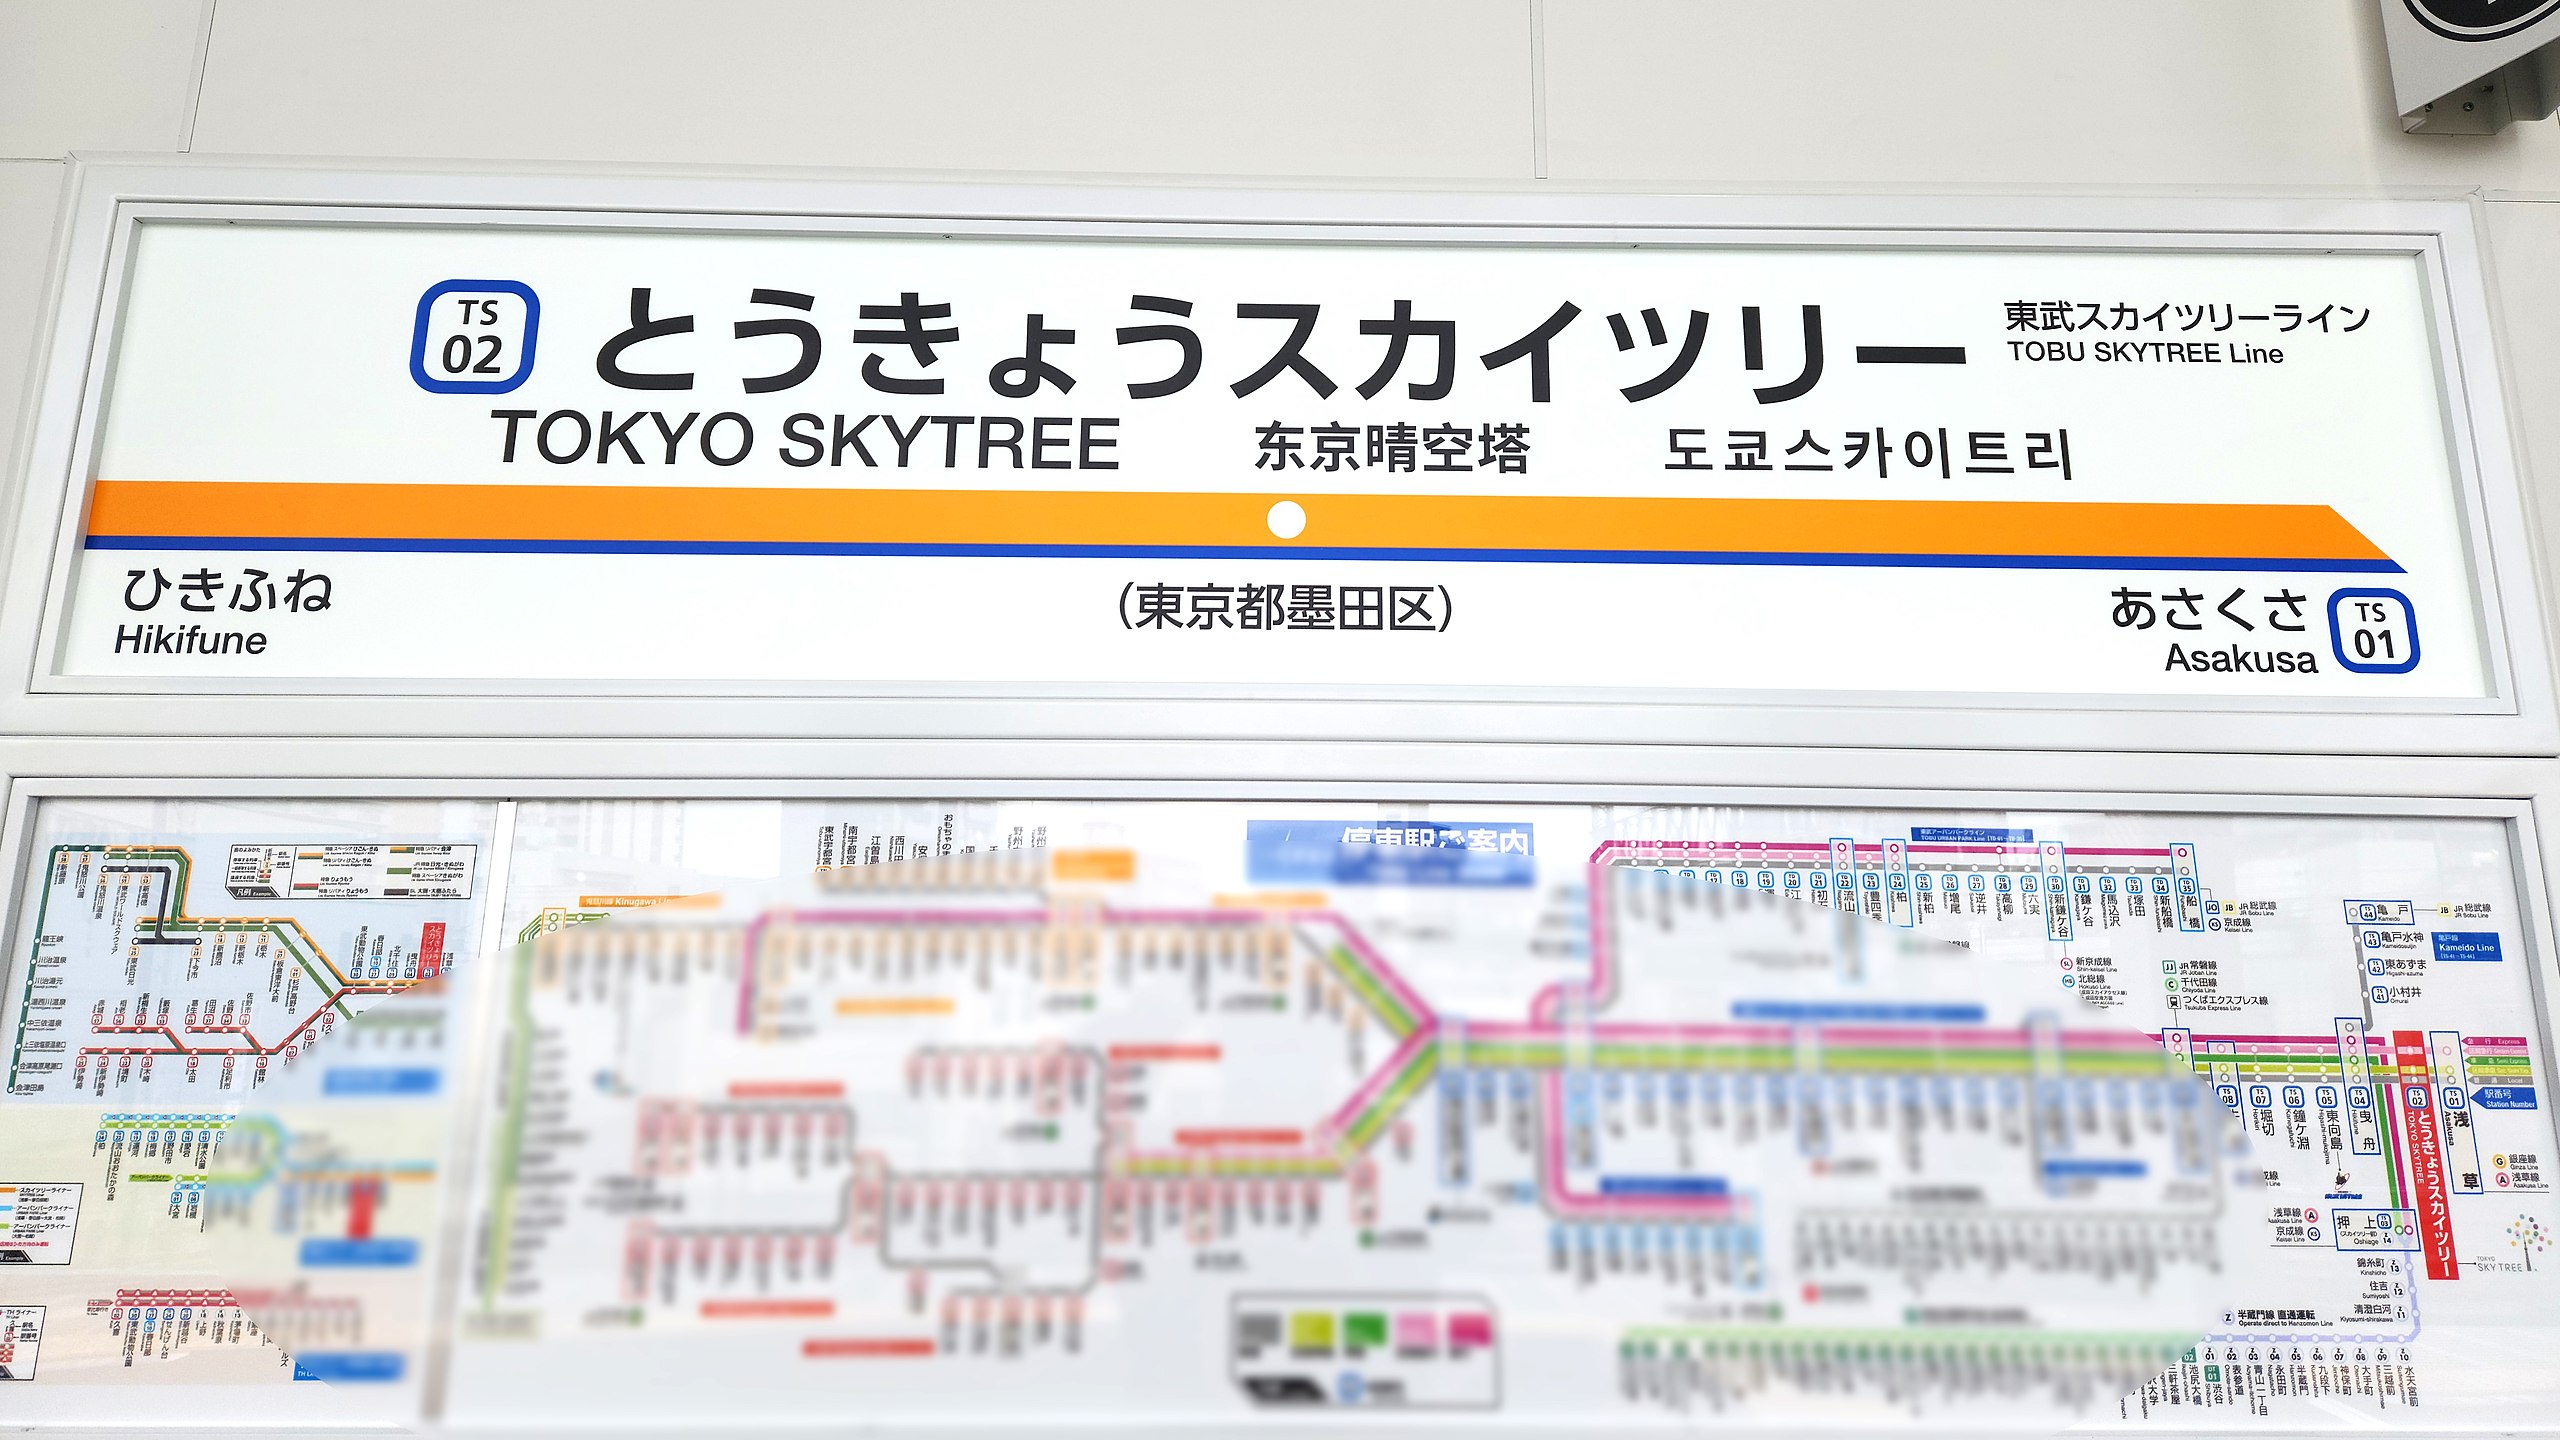 File:Tobu-railway-TS02-Tokyo-skytree-station-sign-20221203 